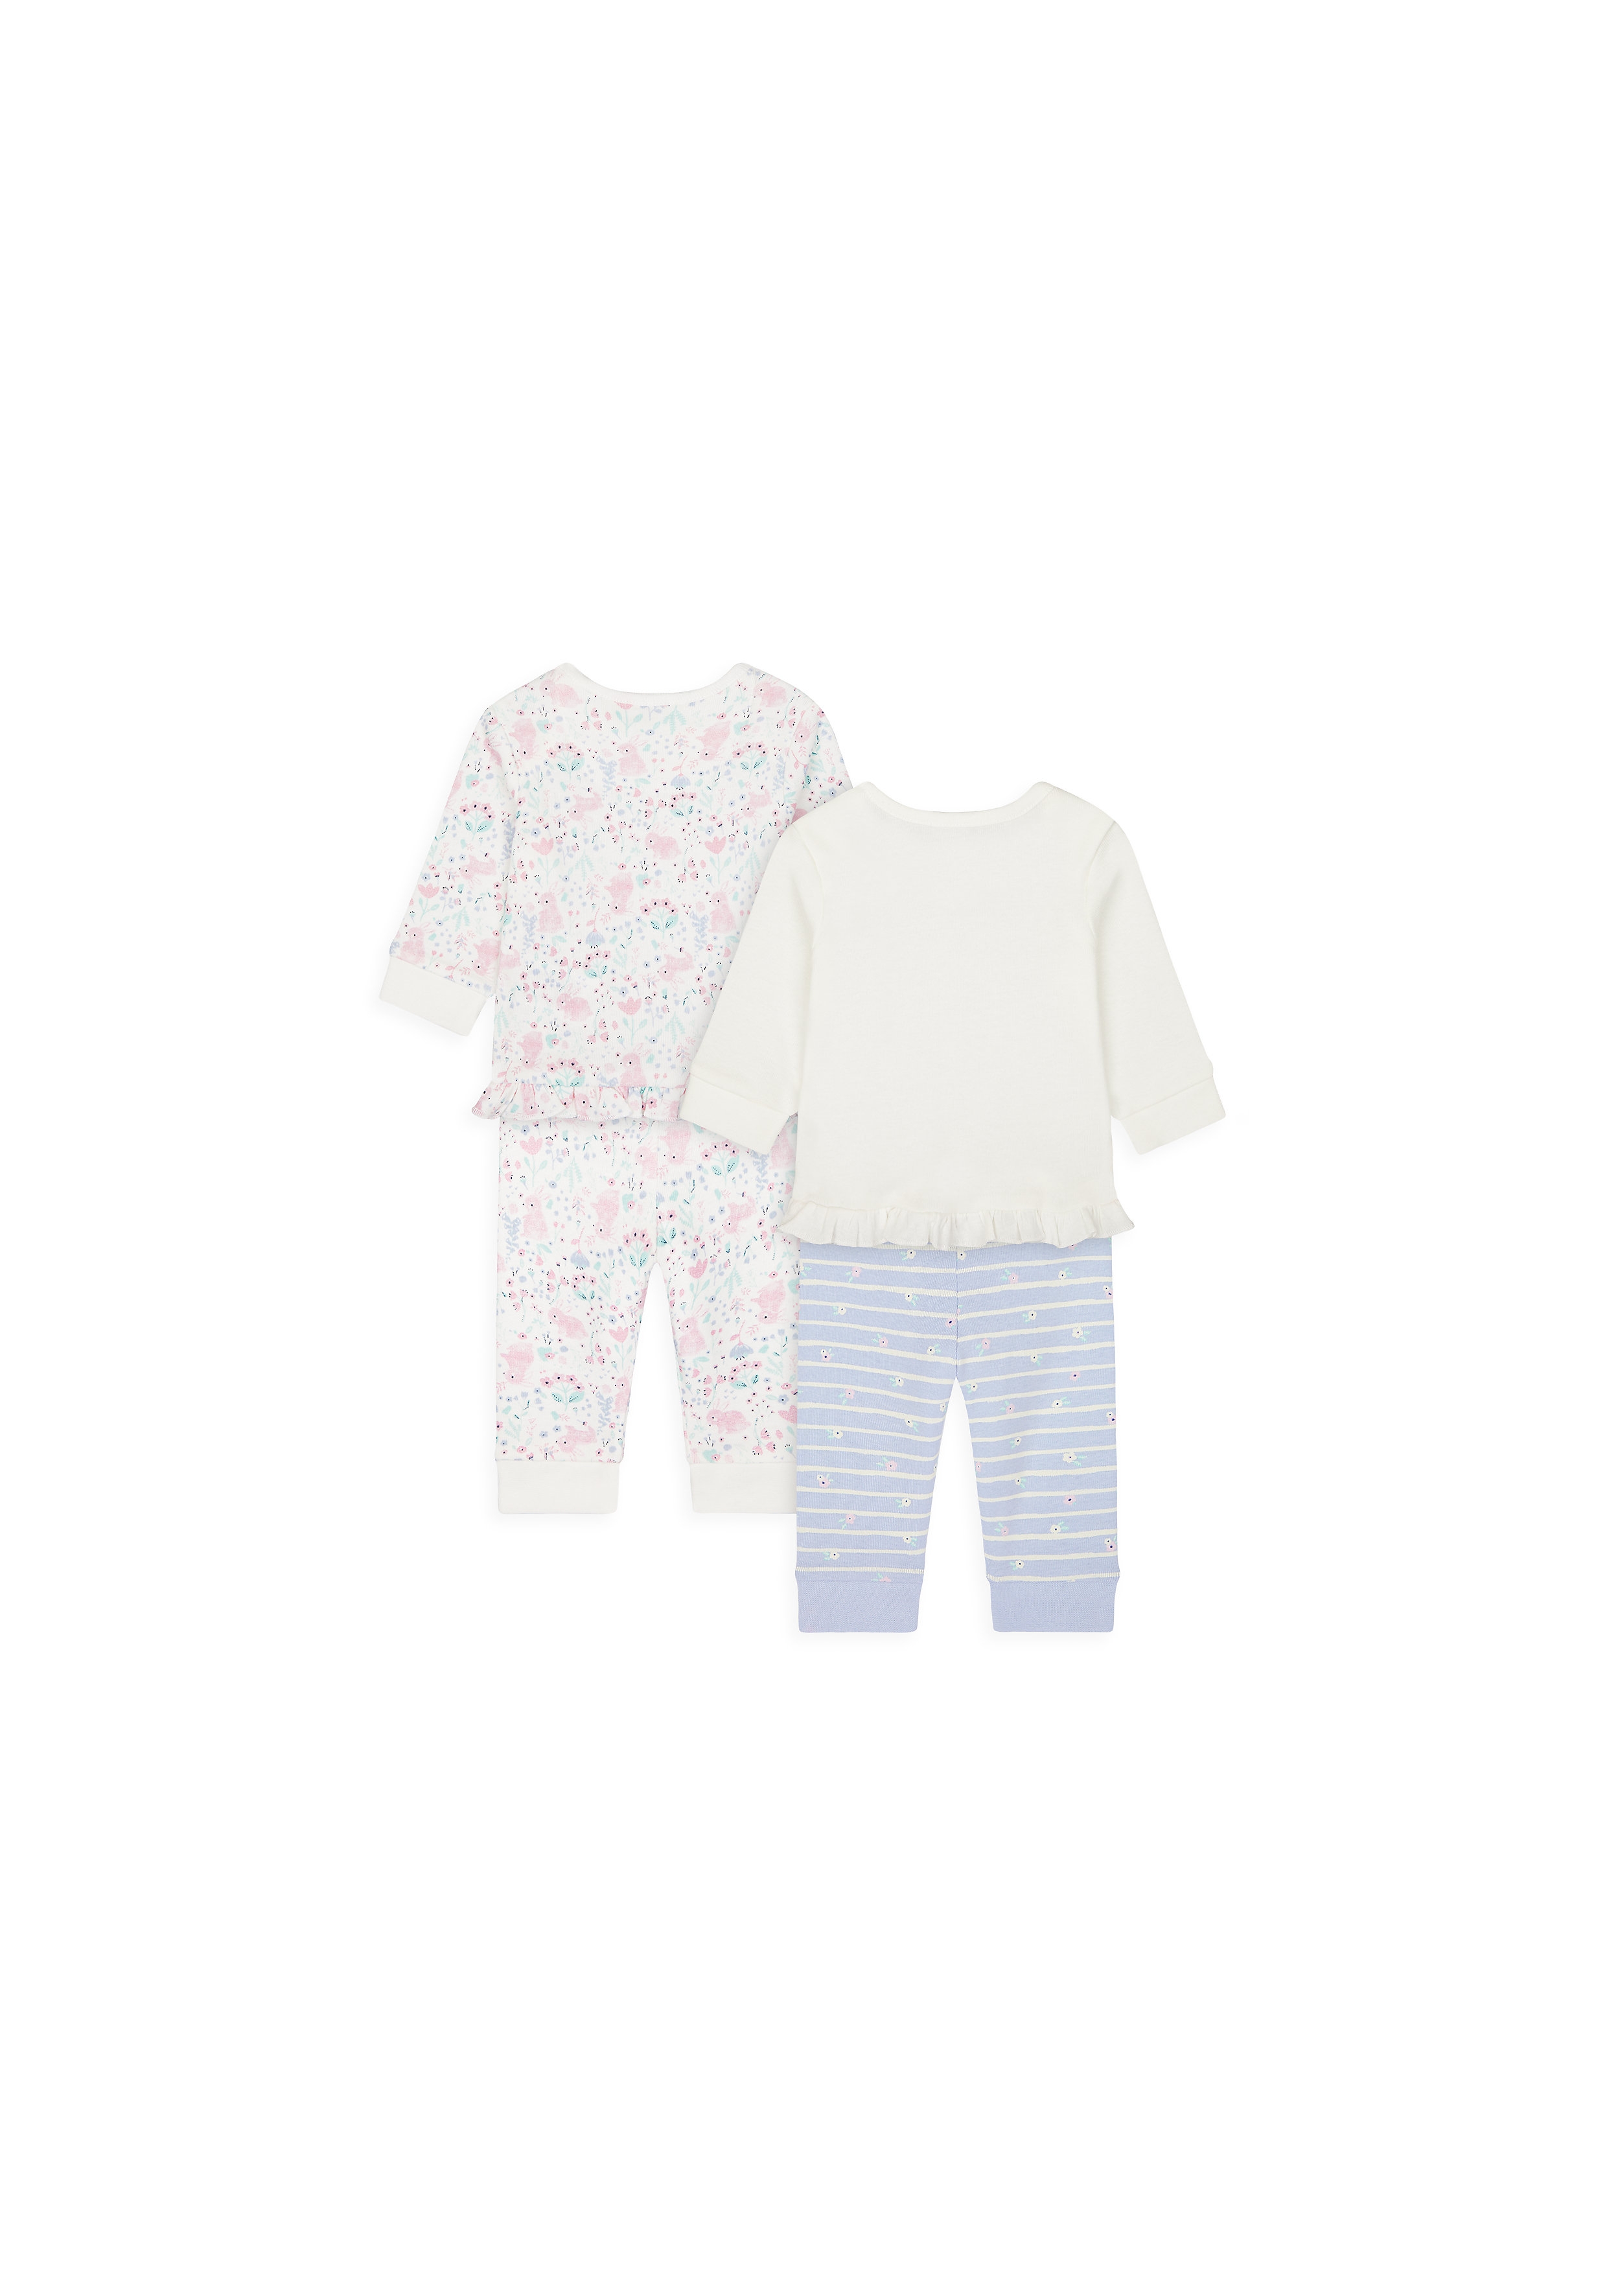 Girls Full Sleeves Pyjama Set Bunny Print - Pack Of 2 - Multicolor